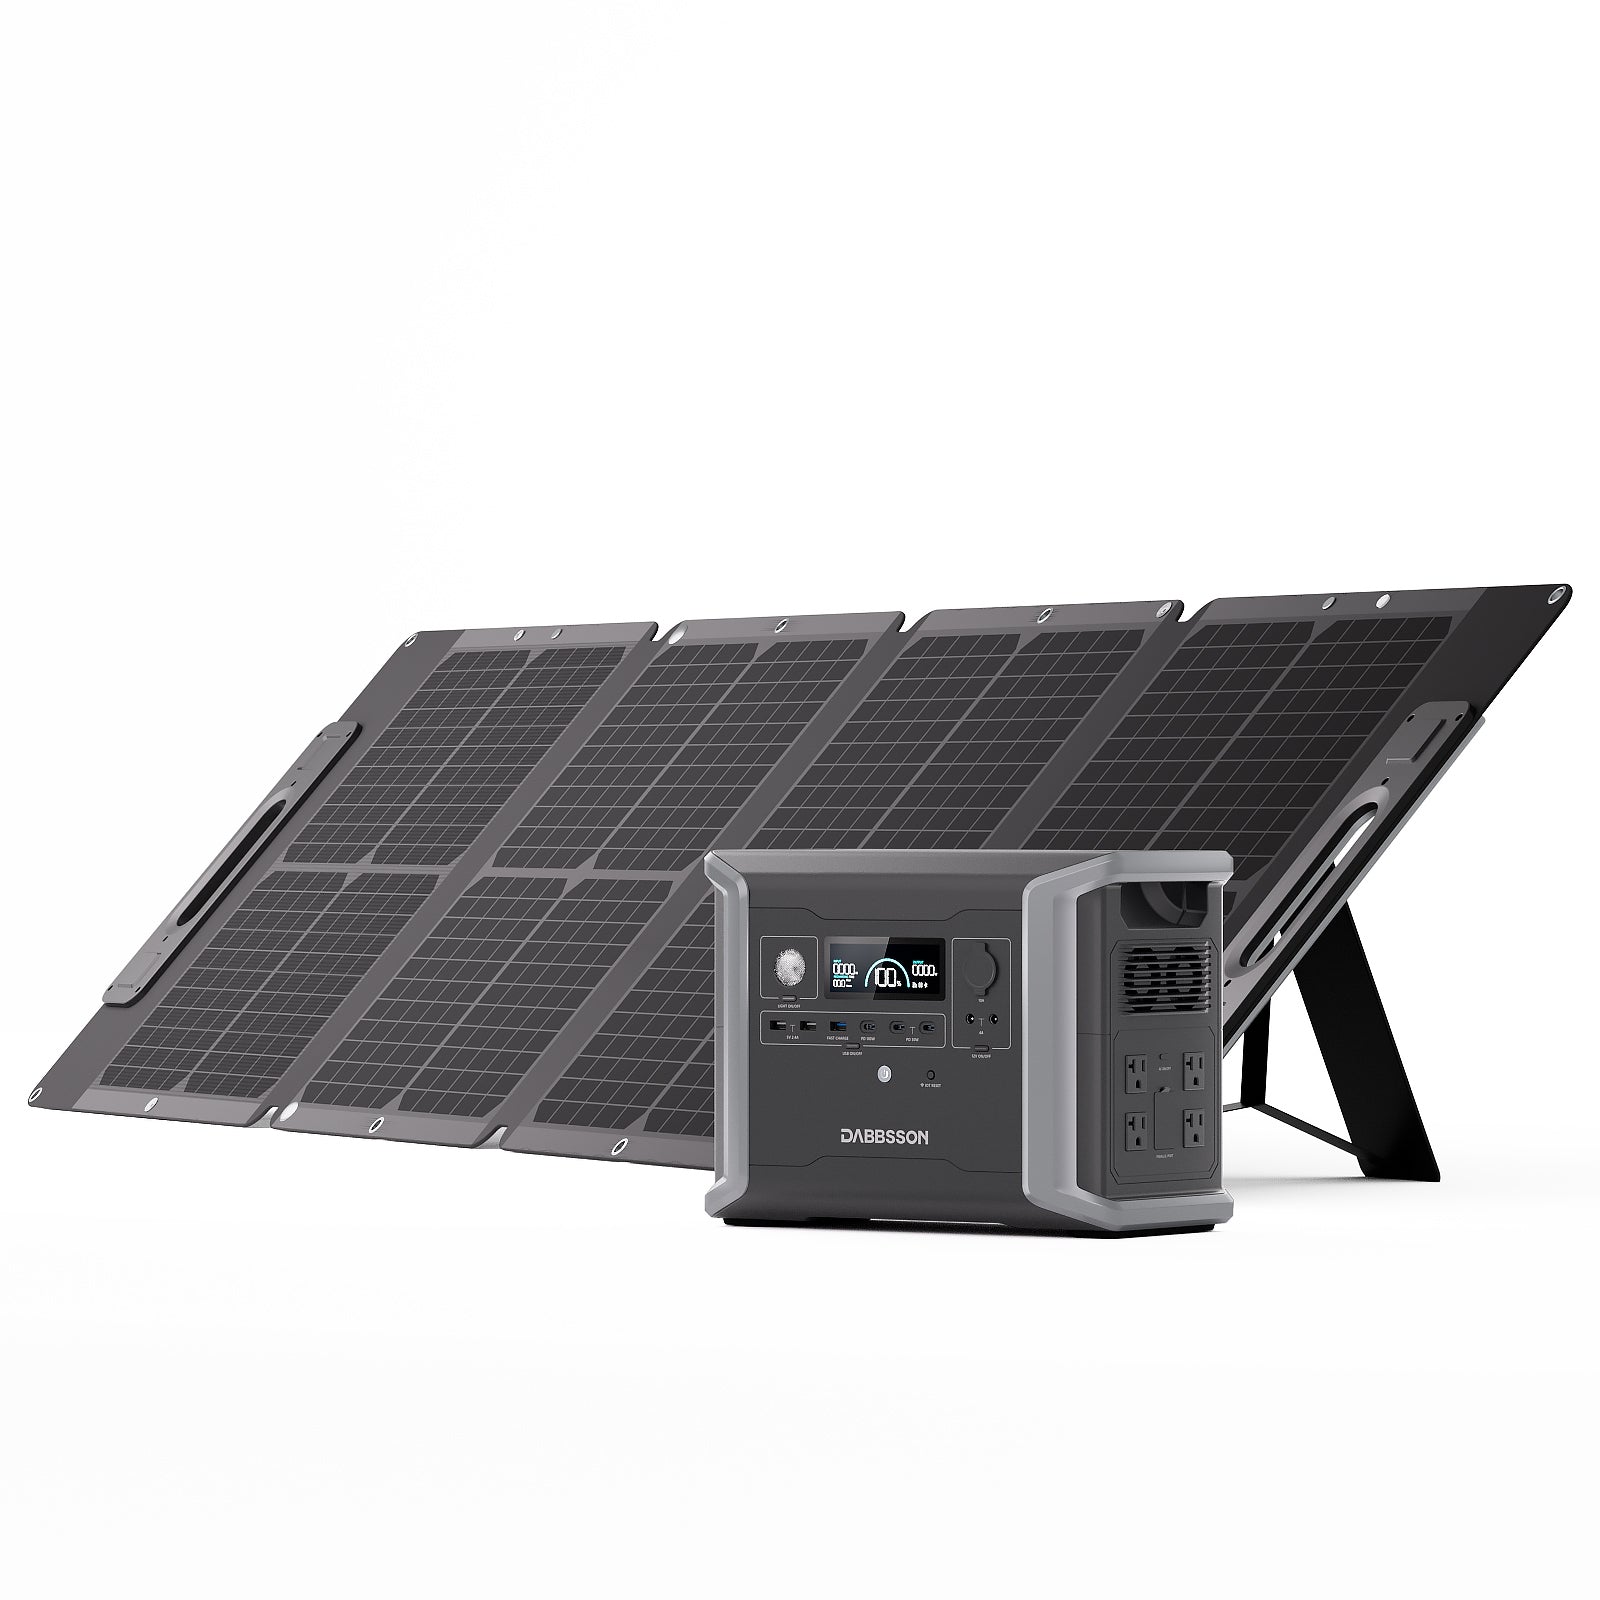 Dabbsson DBS1300 Solar Generator - 1330Wh | 1200W - Dabbsson US